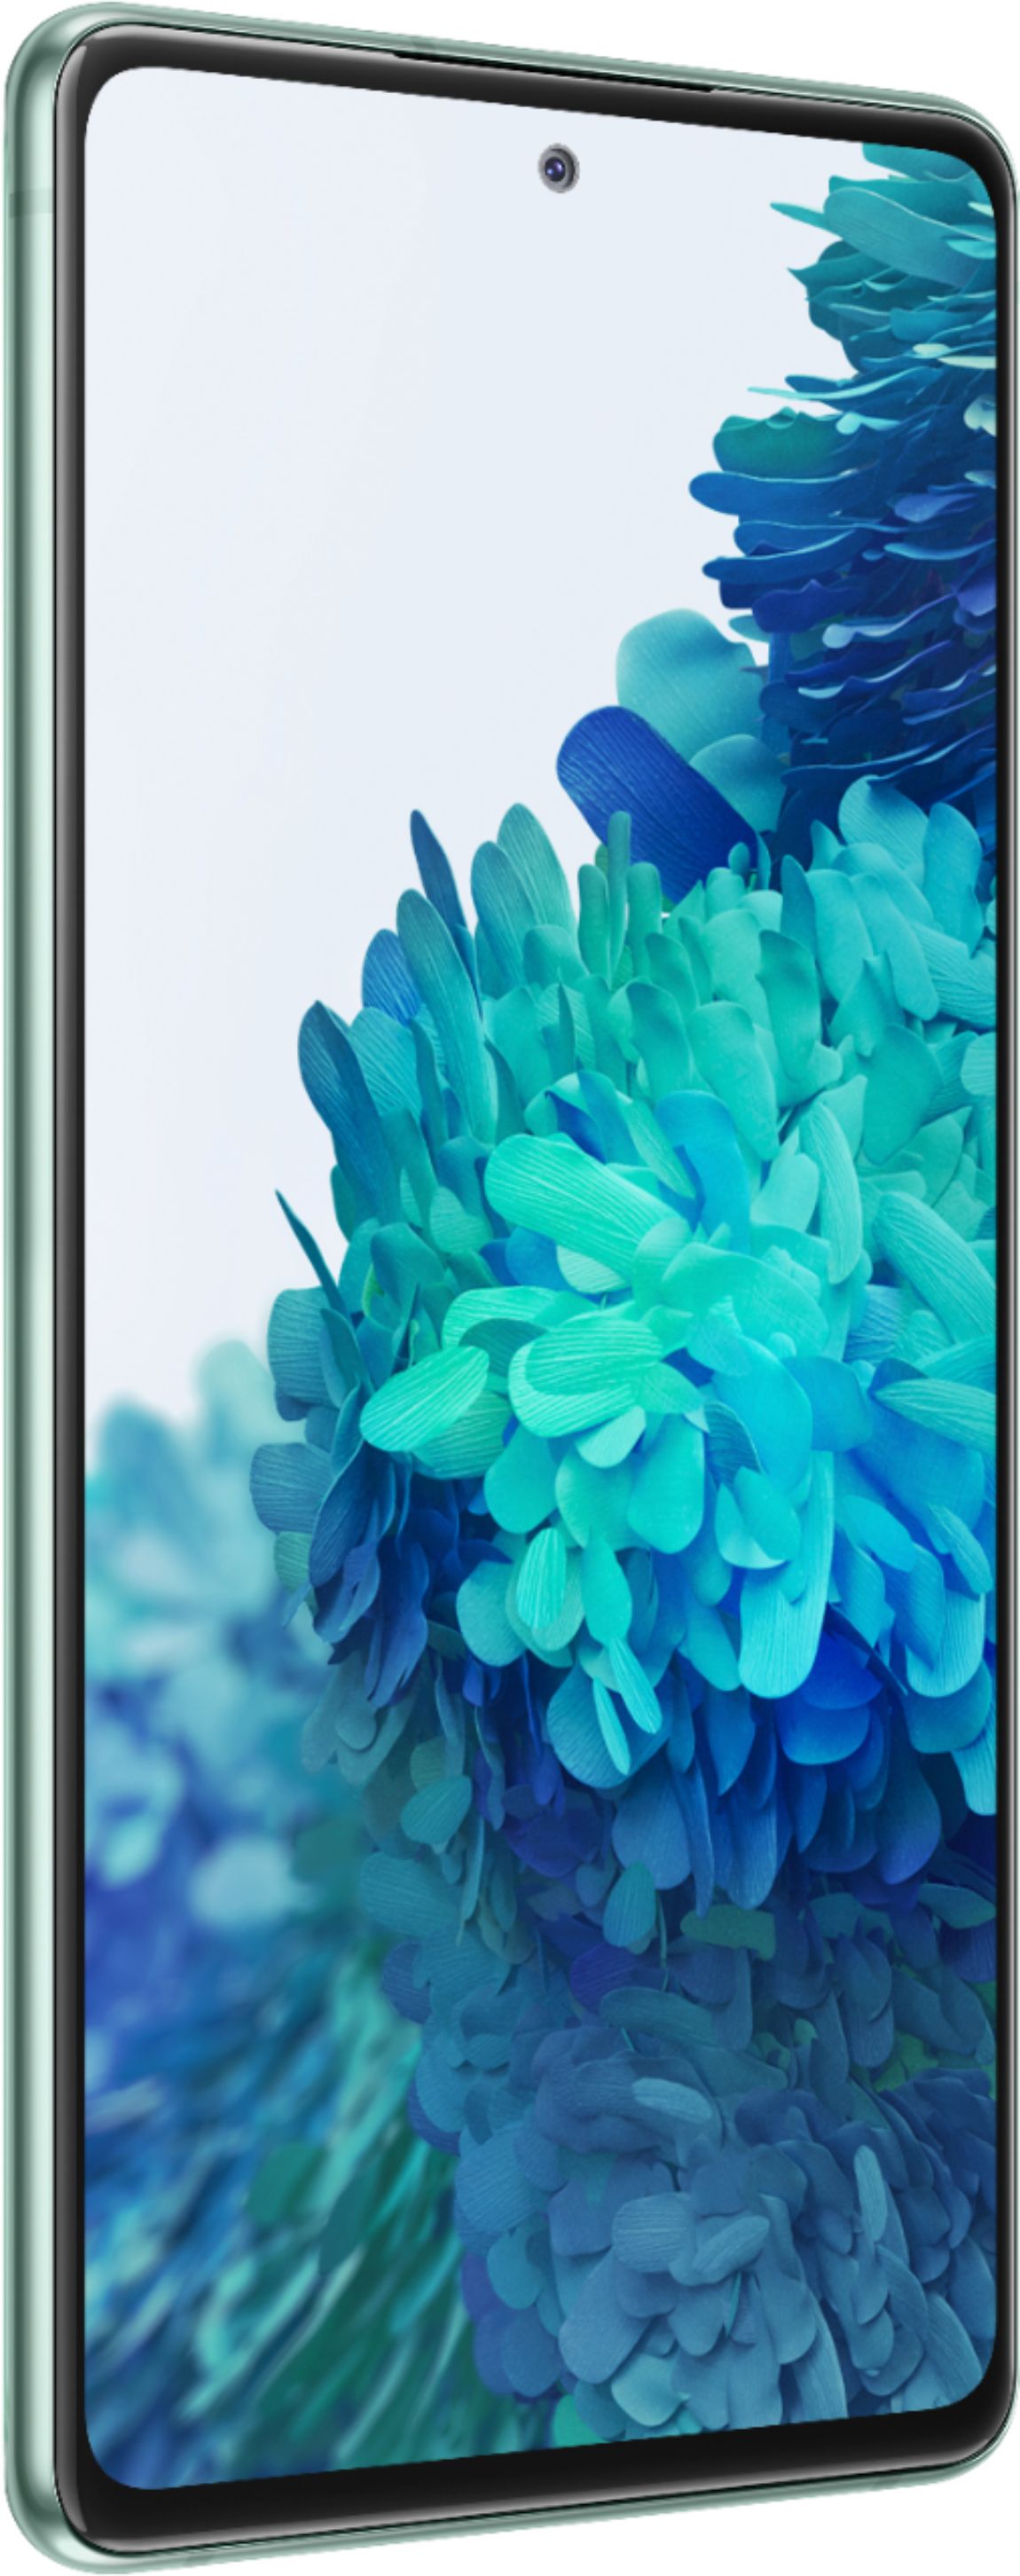 Samsung Galaxy S20 FE 5G SM-G781V - All Colors 128GB - (Verizon Unlocked) -  Good